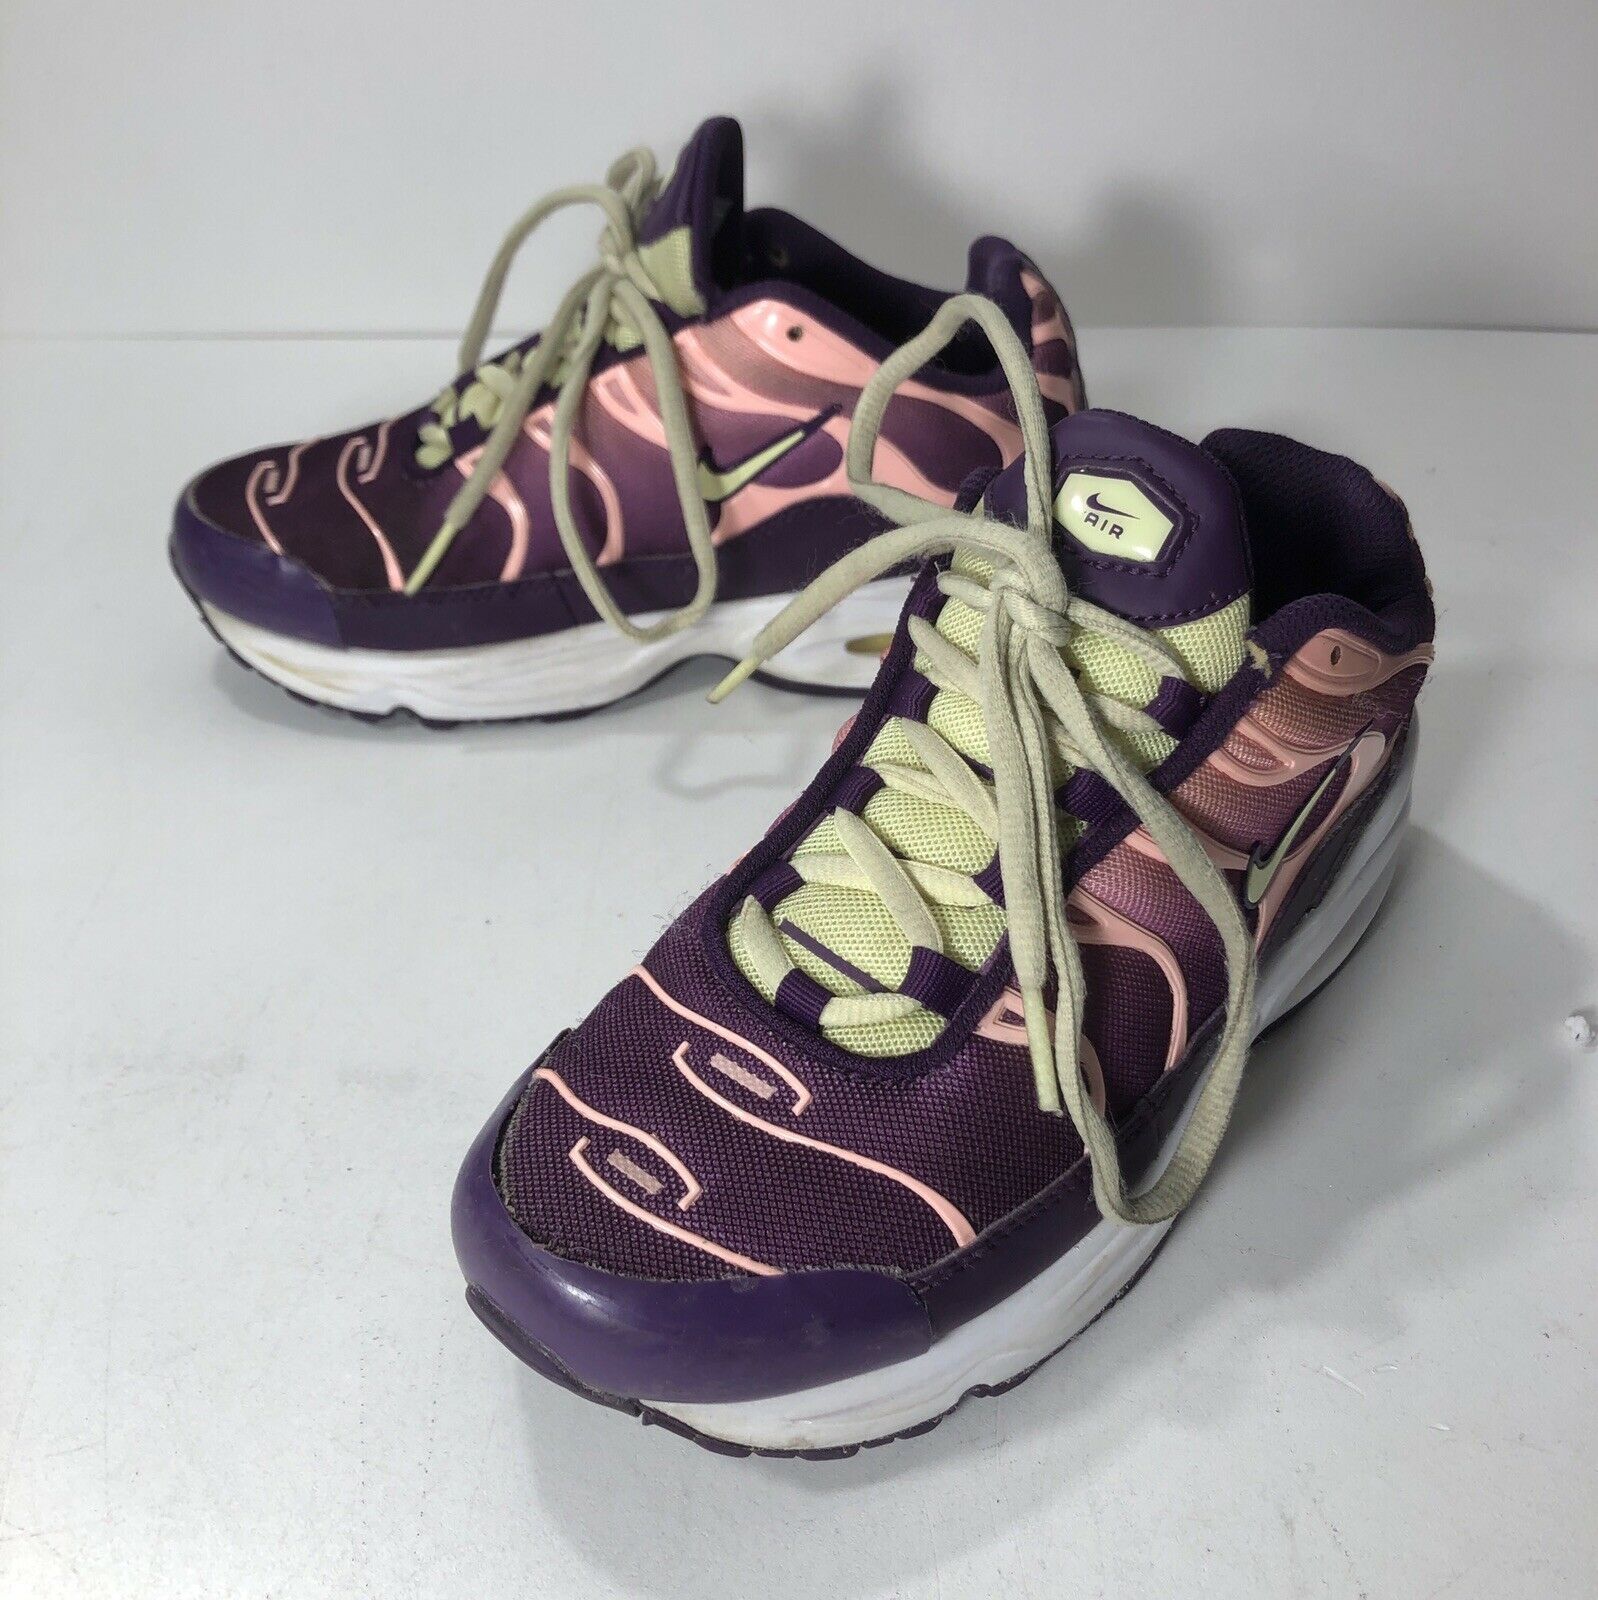 Nike Air Max Plus Shoes TN Pink Citron Purple Girls Size 3Y AV7963-600